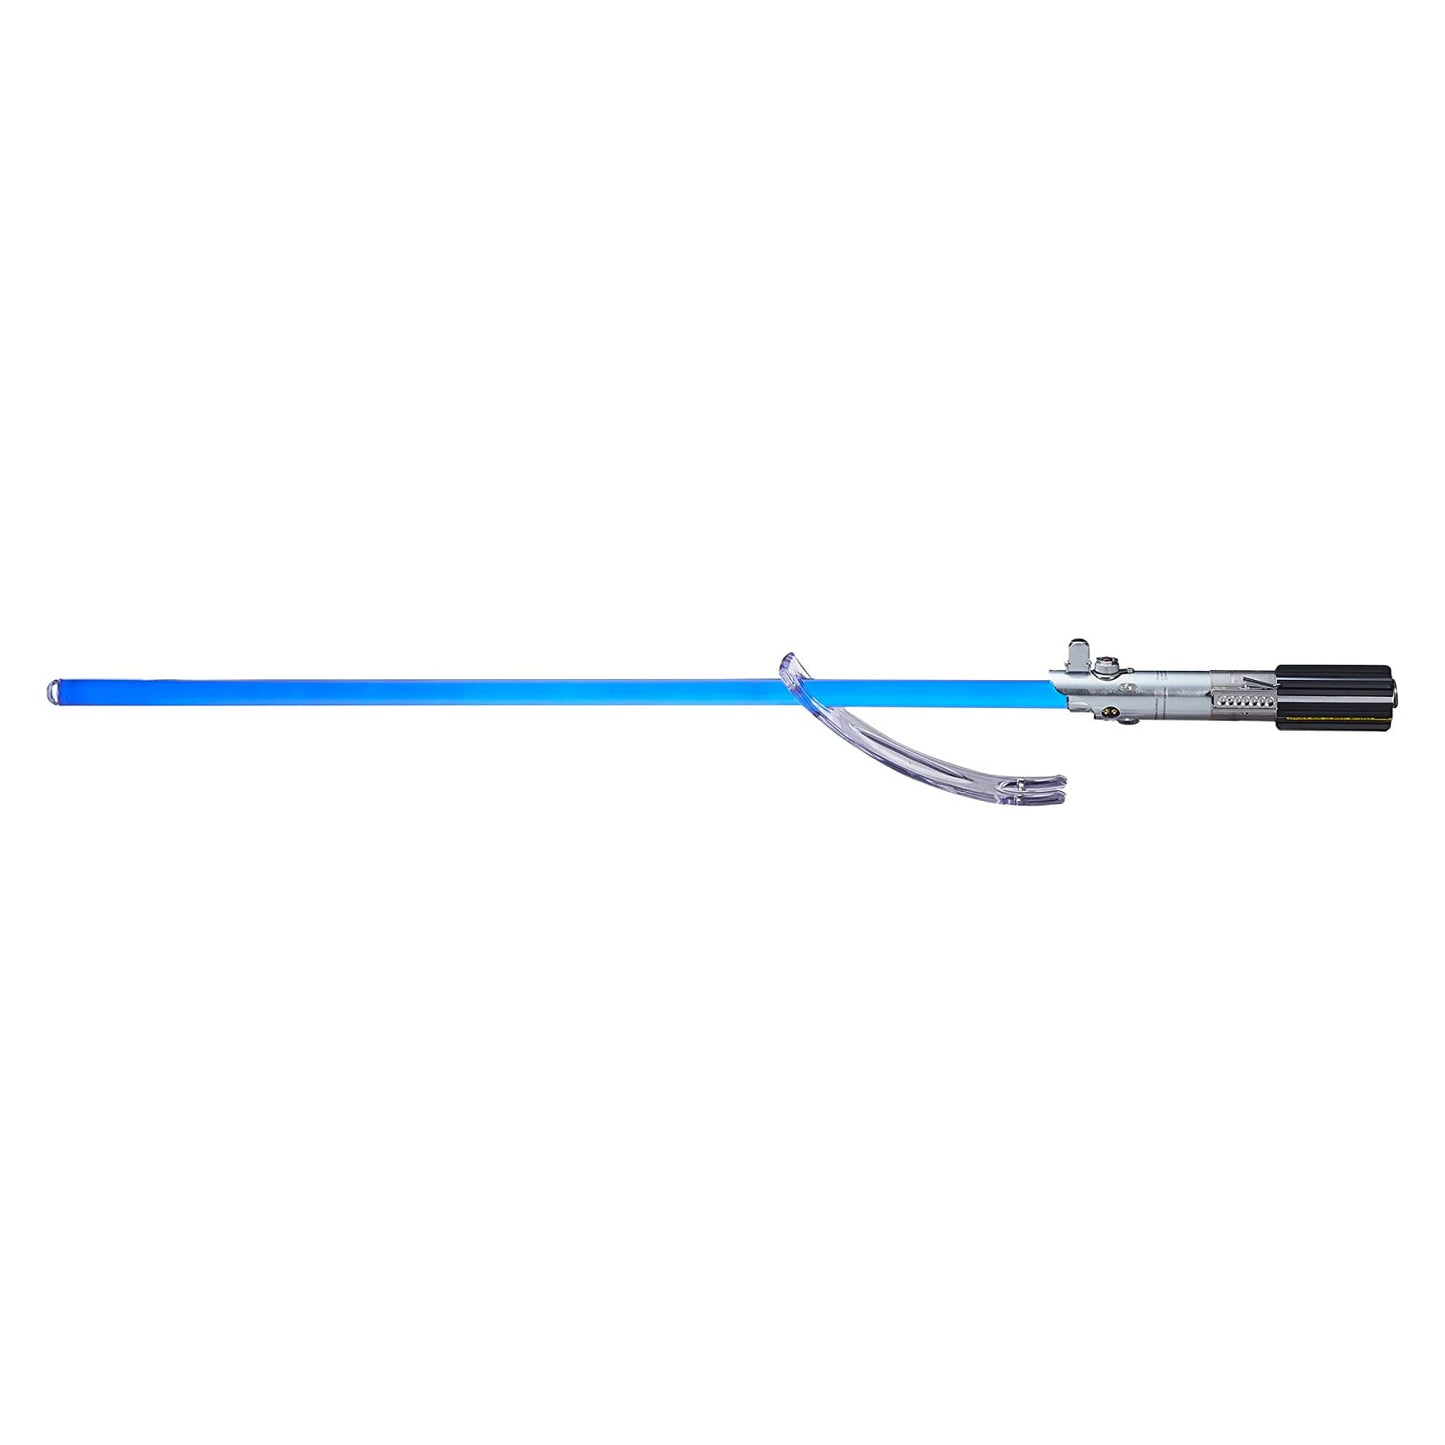 The Black Series: Luke Skywalker Star Wars Force FX Lightsaber - Blue